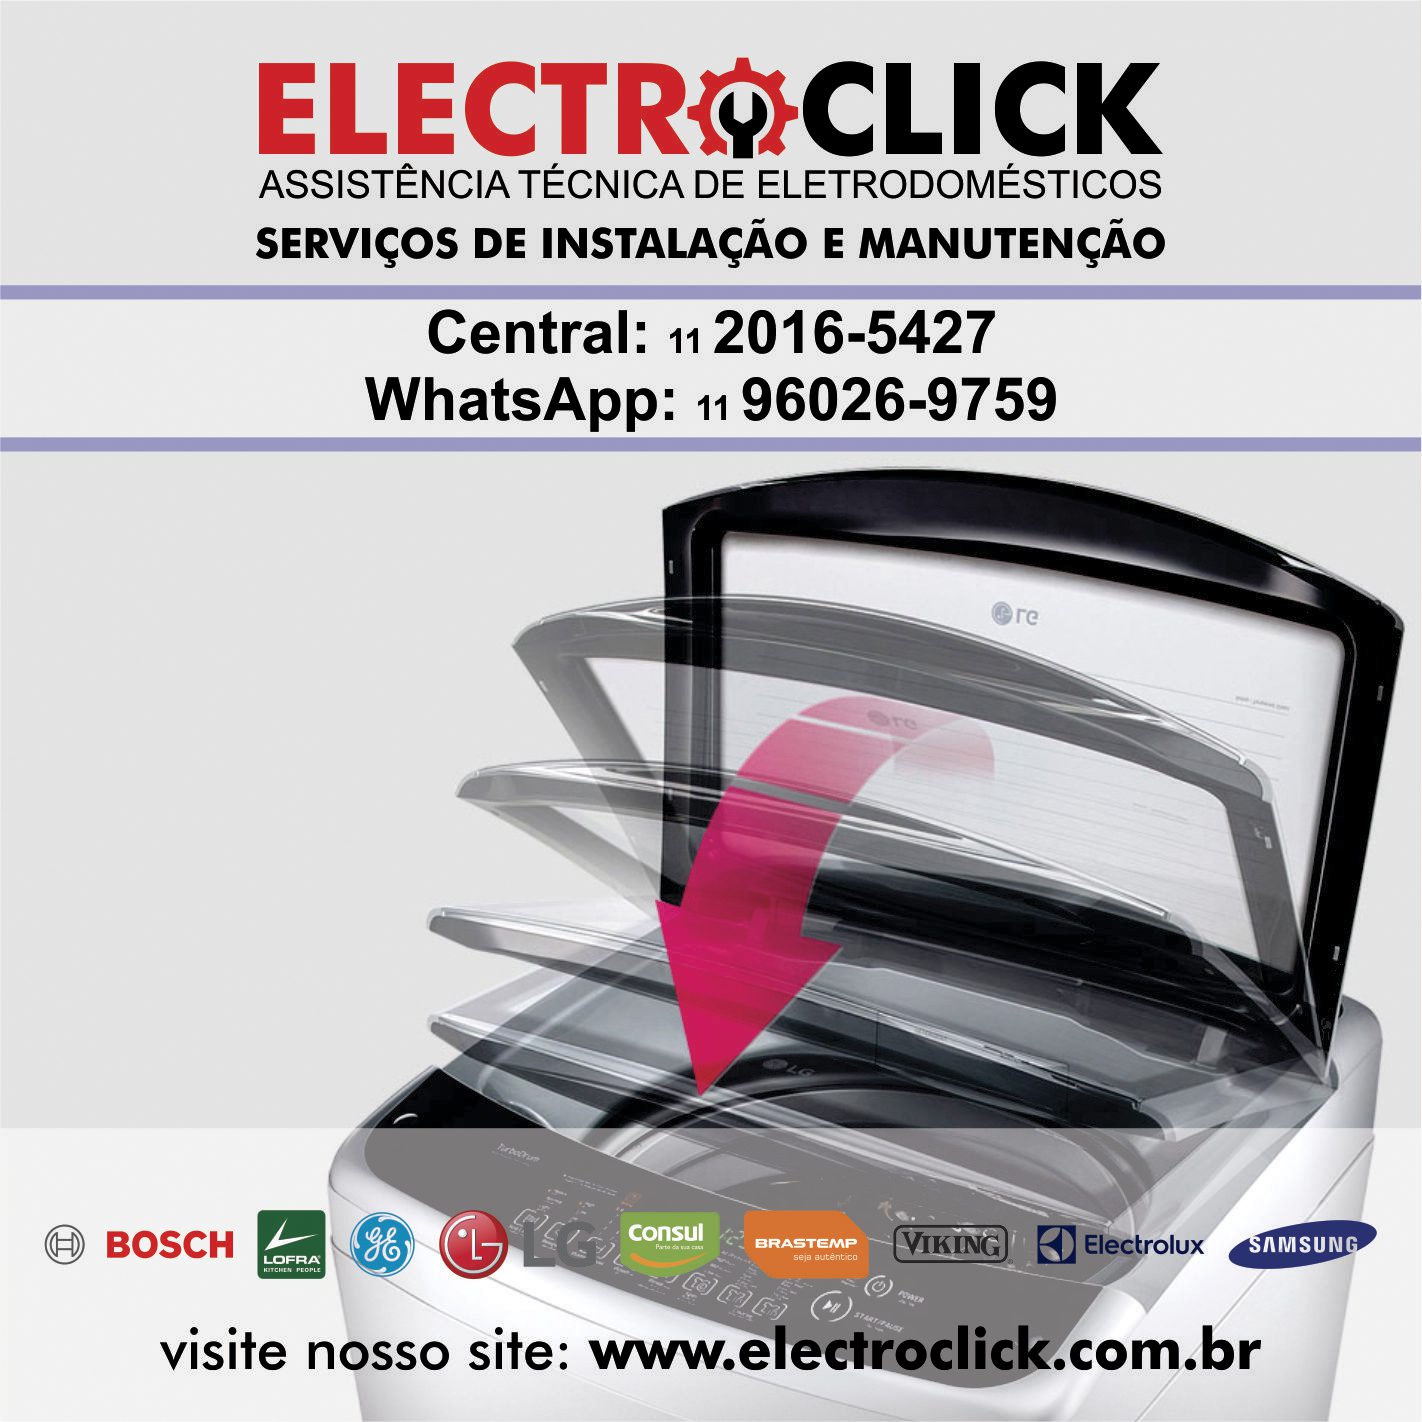 electroclick2